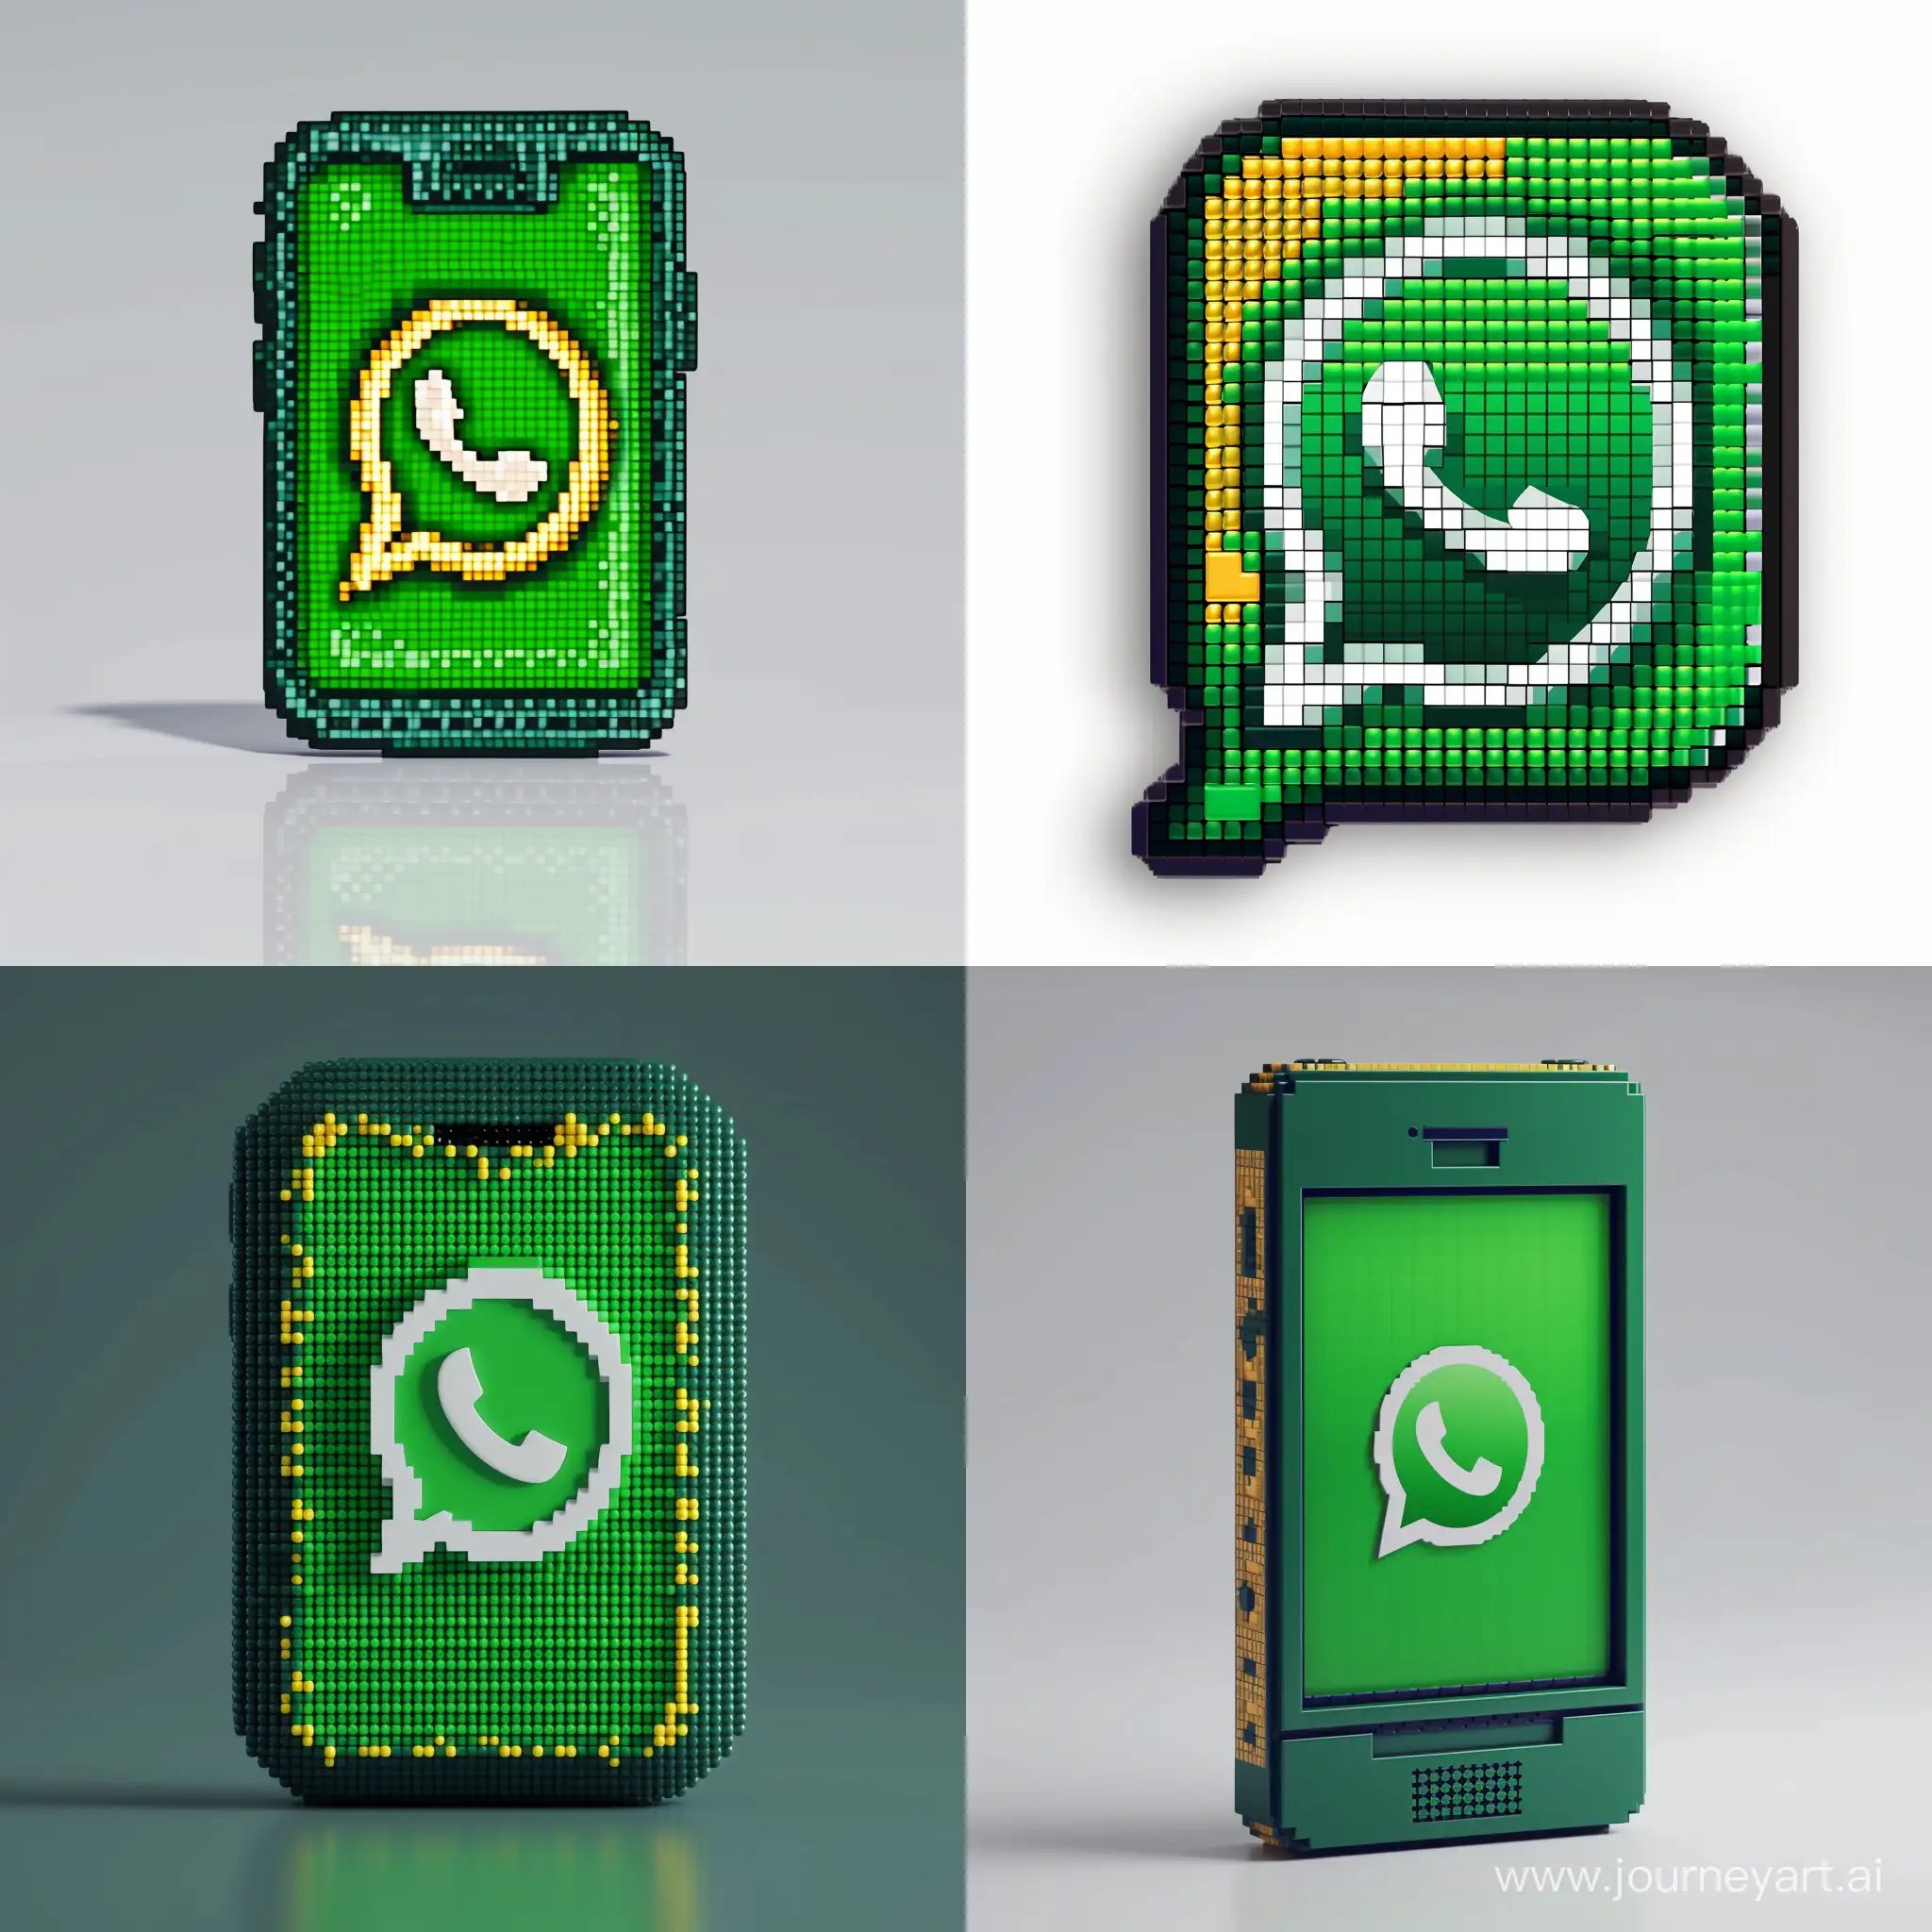 WhatsApp logo 8 bit